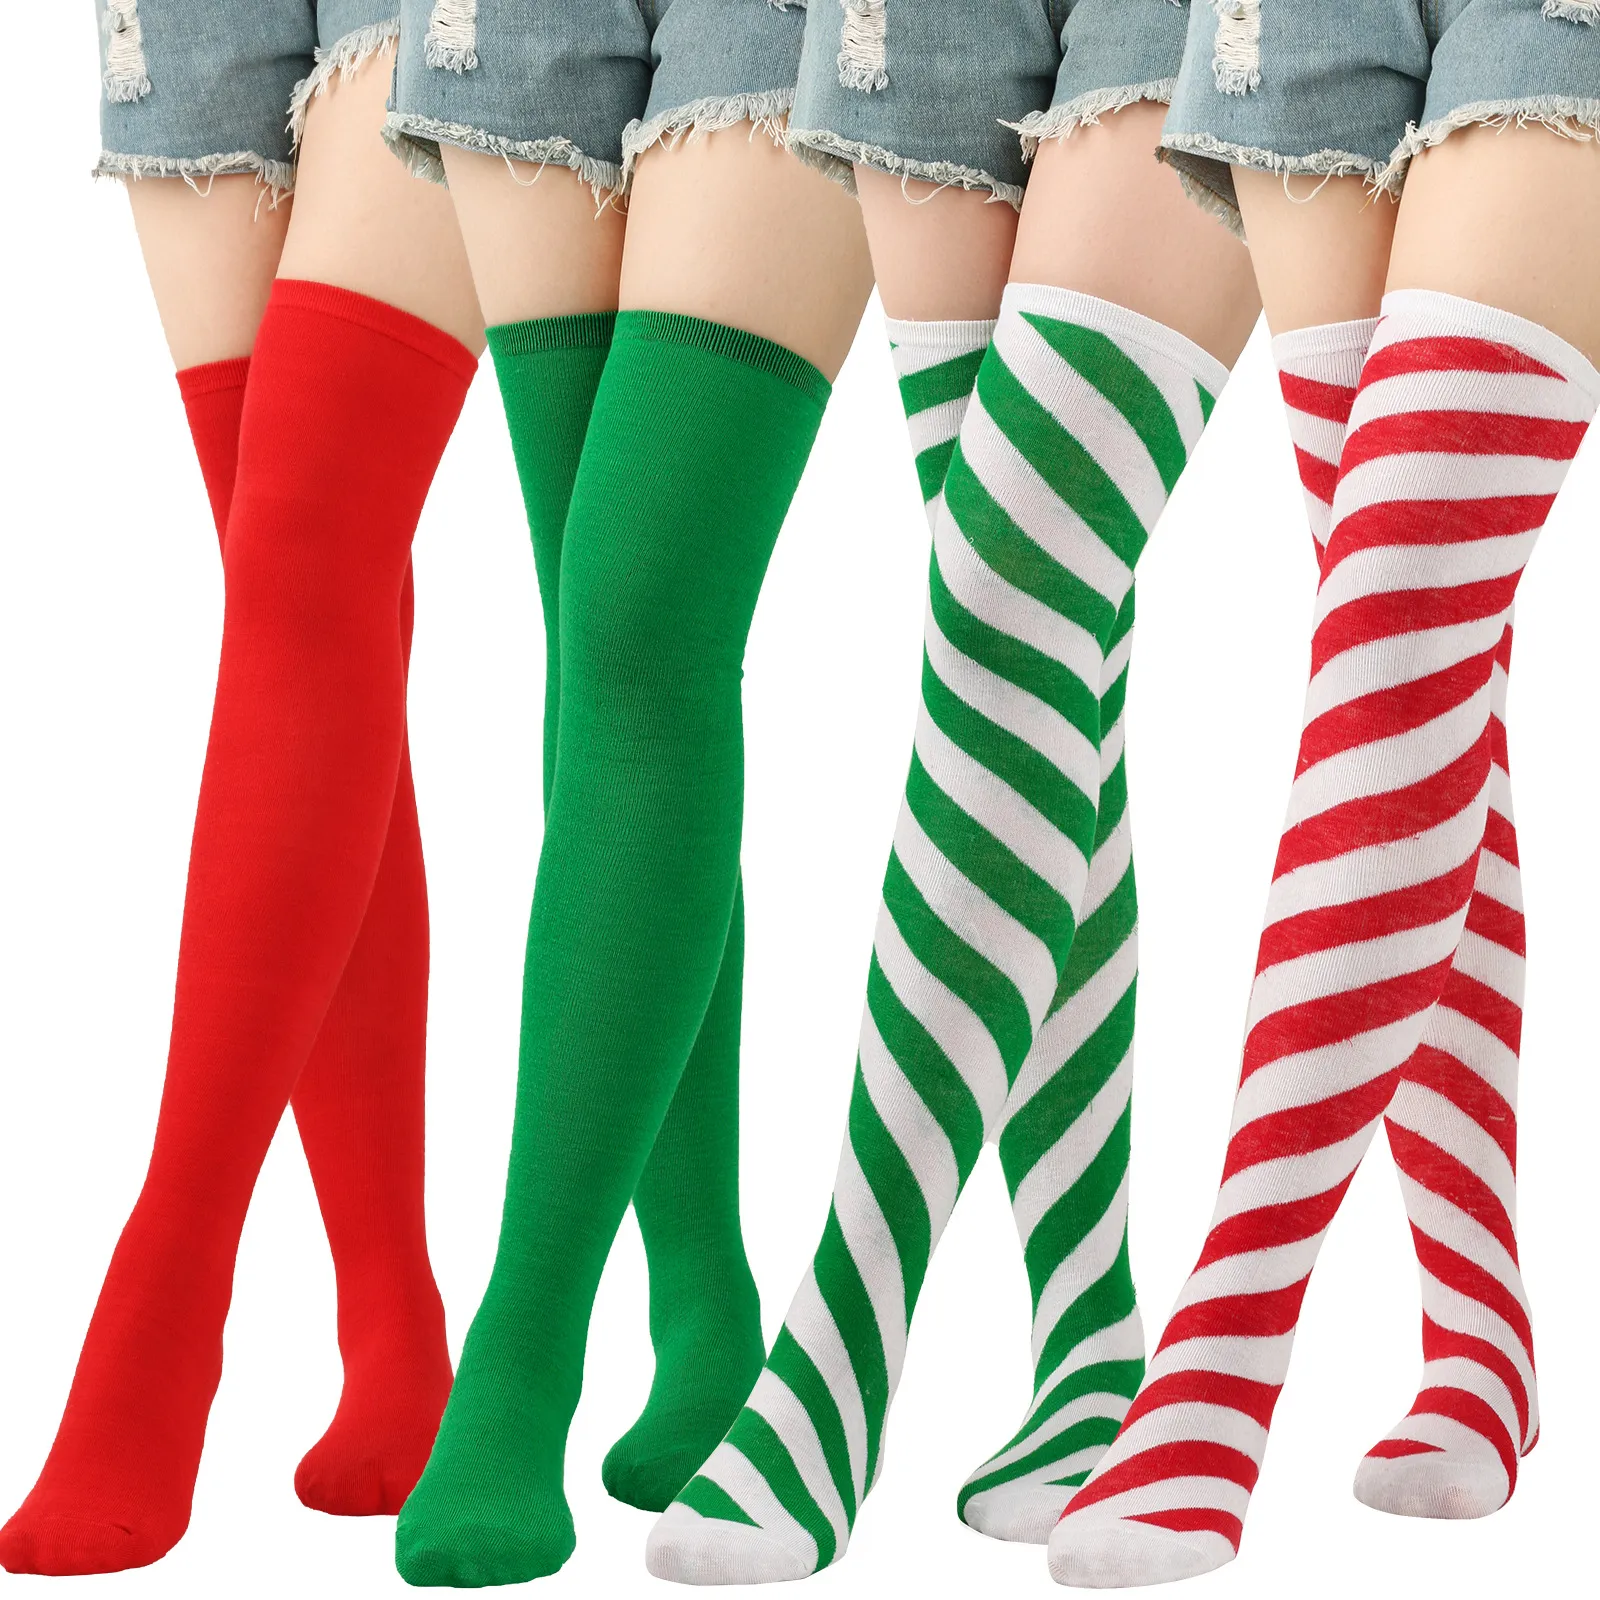 Women Girls Socks Halloween Christmas Festive Parties Fashion Contrast Striped ball sock knee high sock Xmas Stripe Stockings